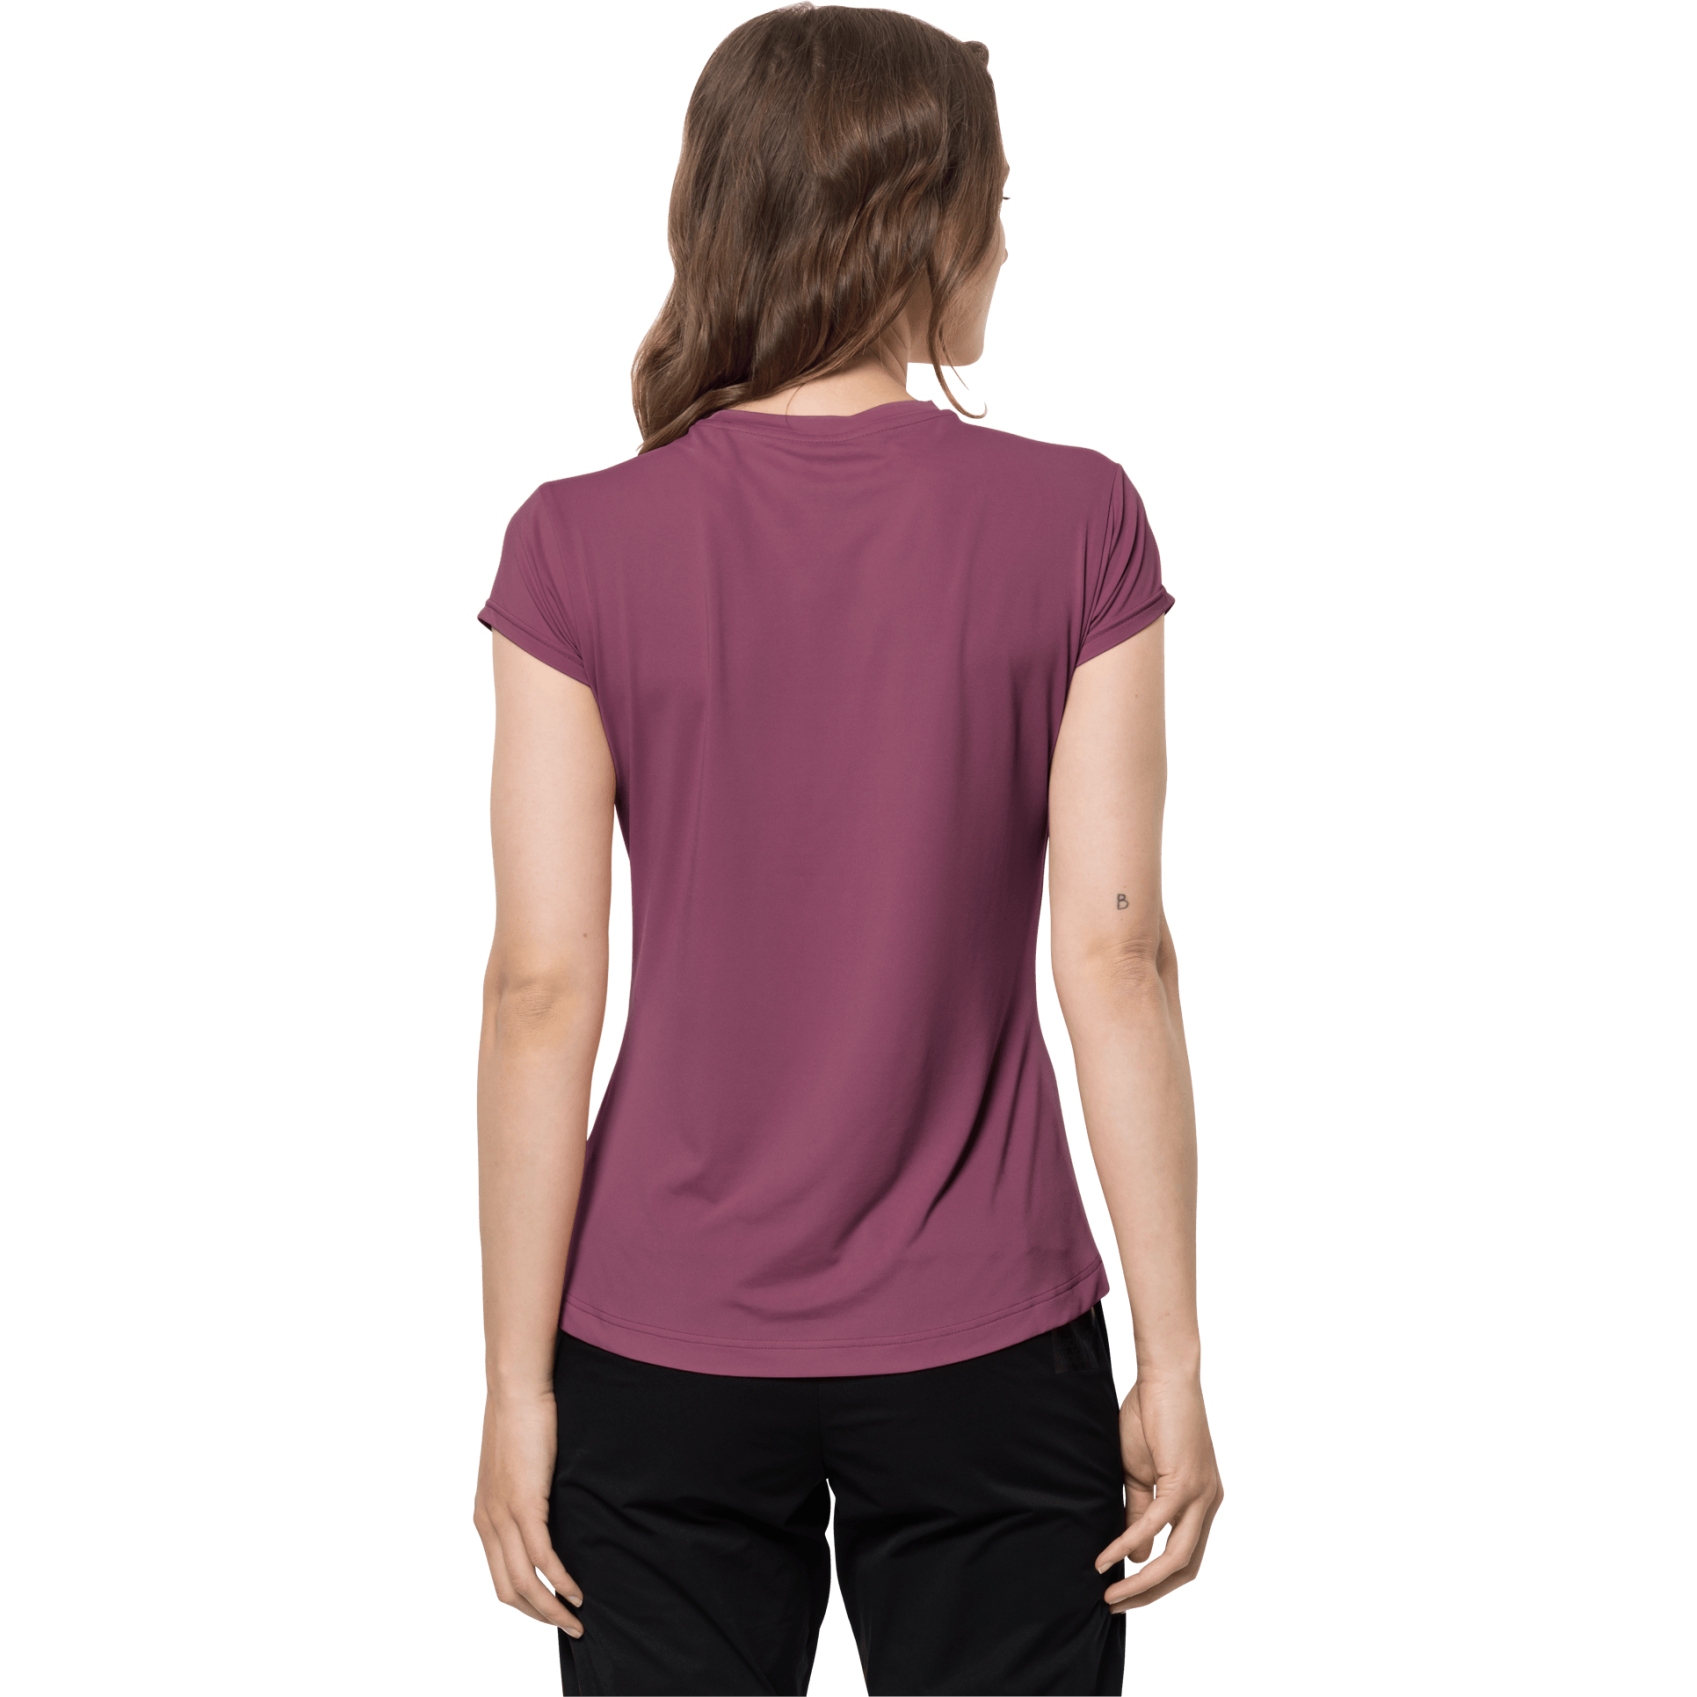 Jack Wolfskin Tasman violet | Damen quartz T-Shirt BIKE24 